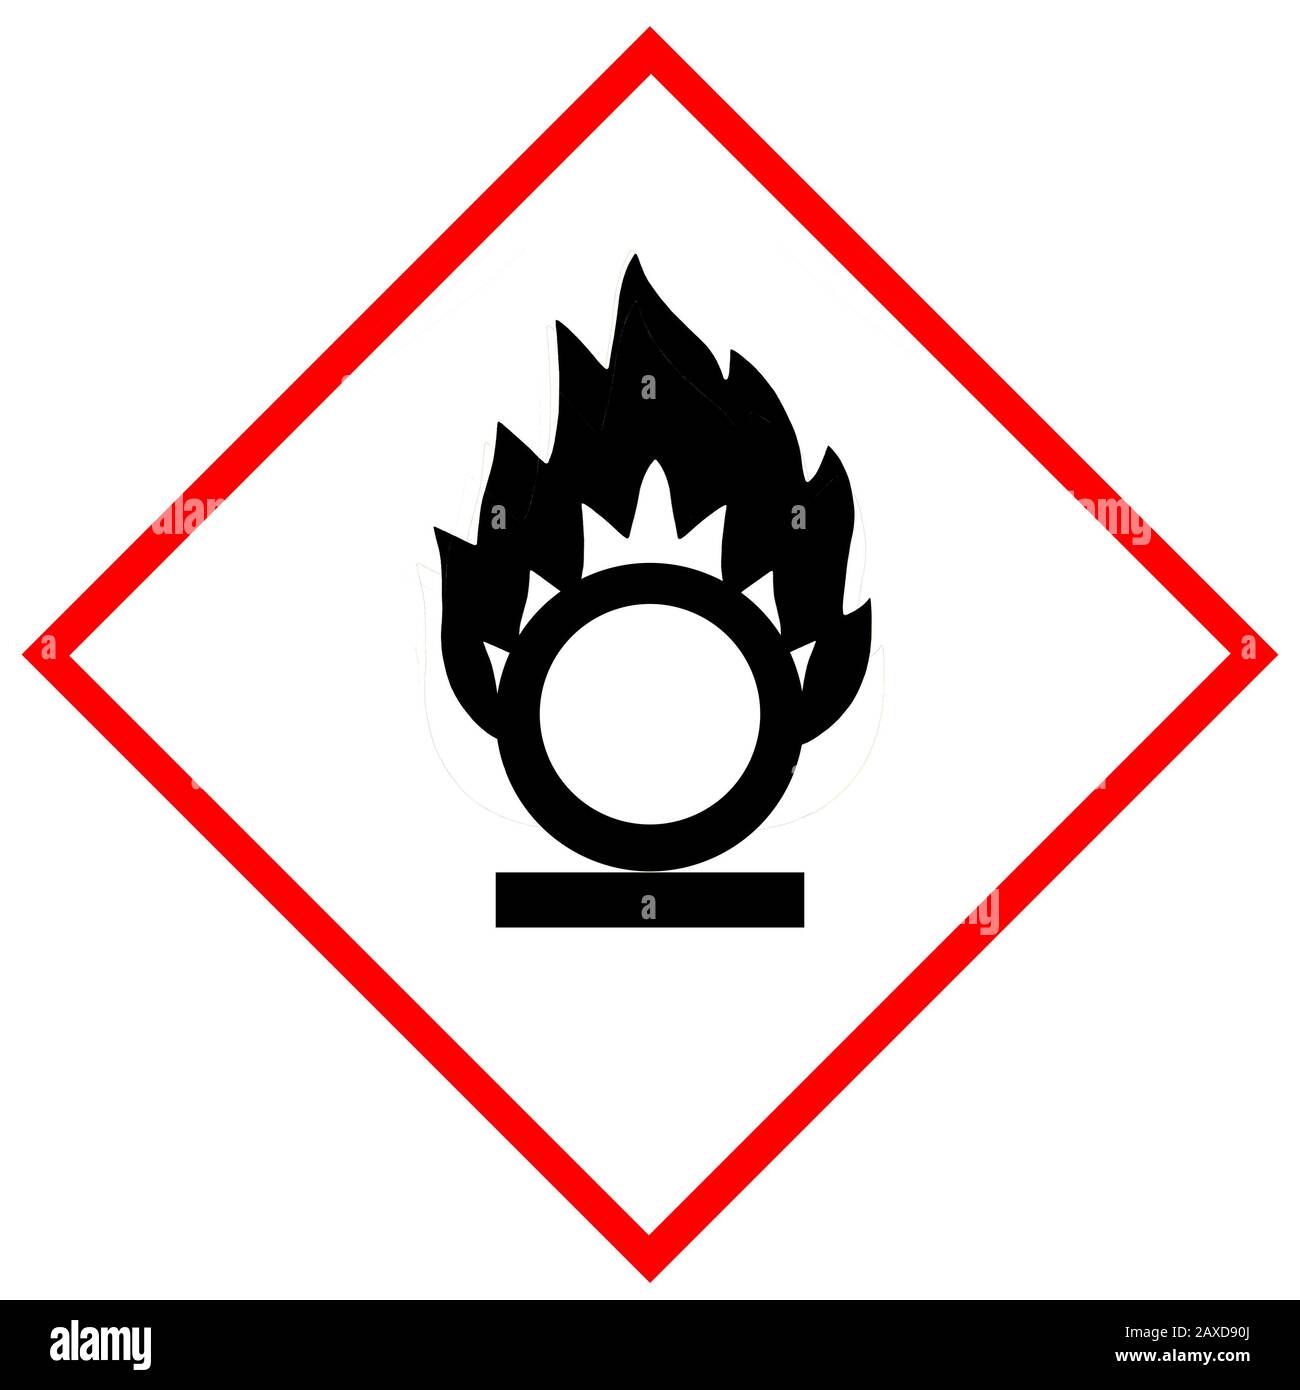 Oxidising gases, oxidising liquids, oxidising solids warning sign Stock Photo